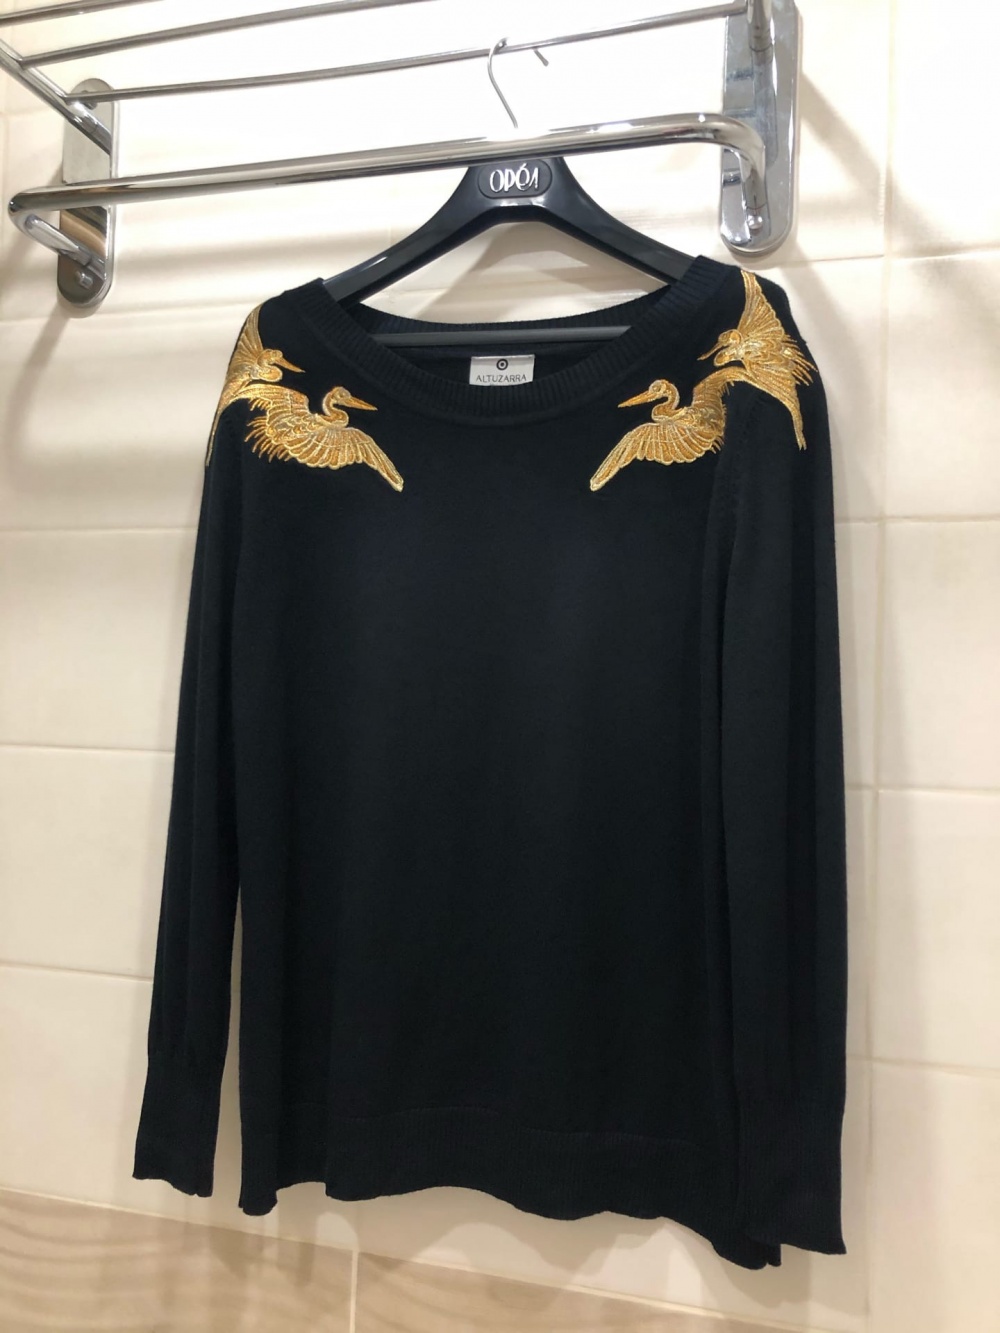 Джемпер Altuzarra For Target Golden Cranes Sweater.Размер М-L.